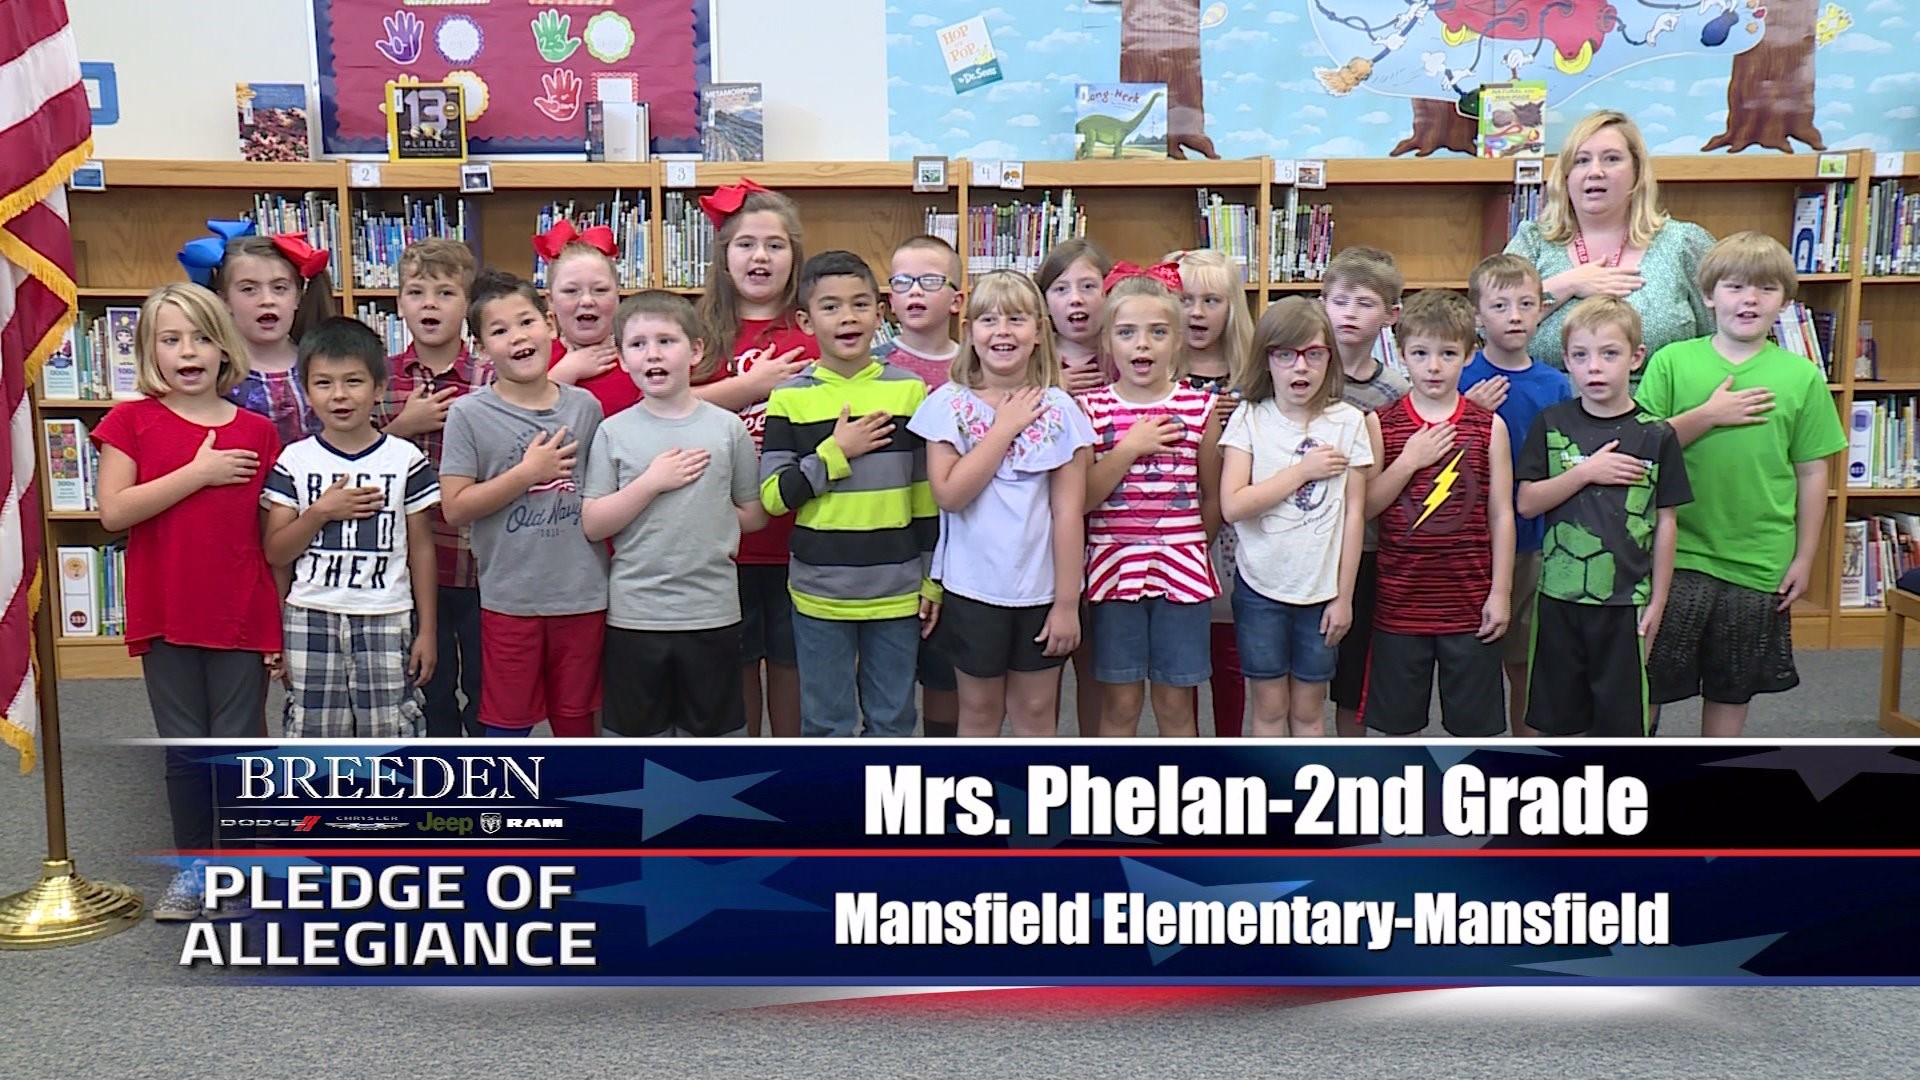 Mrs. Phelan  2nd Grade  Mansfield Elementary, Mansfield